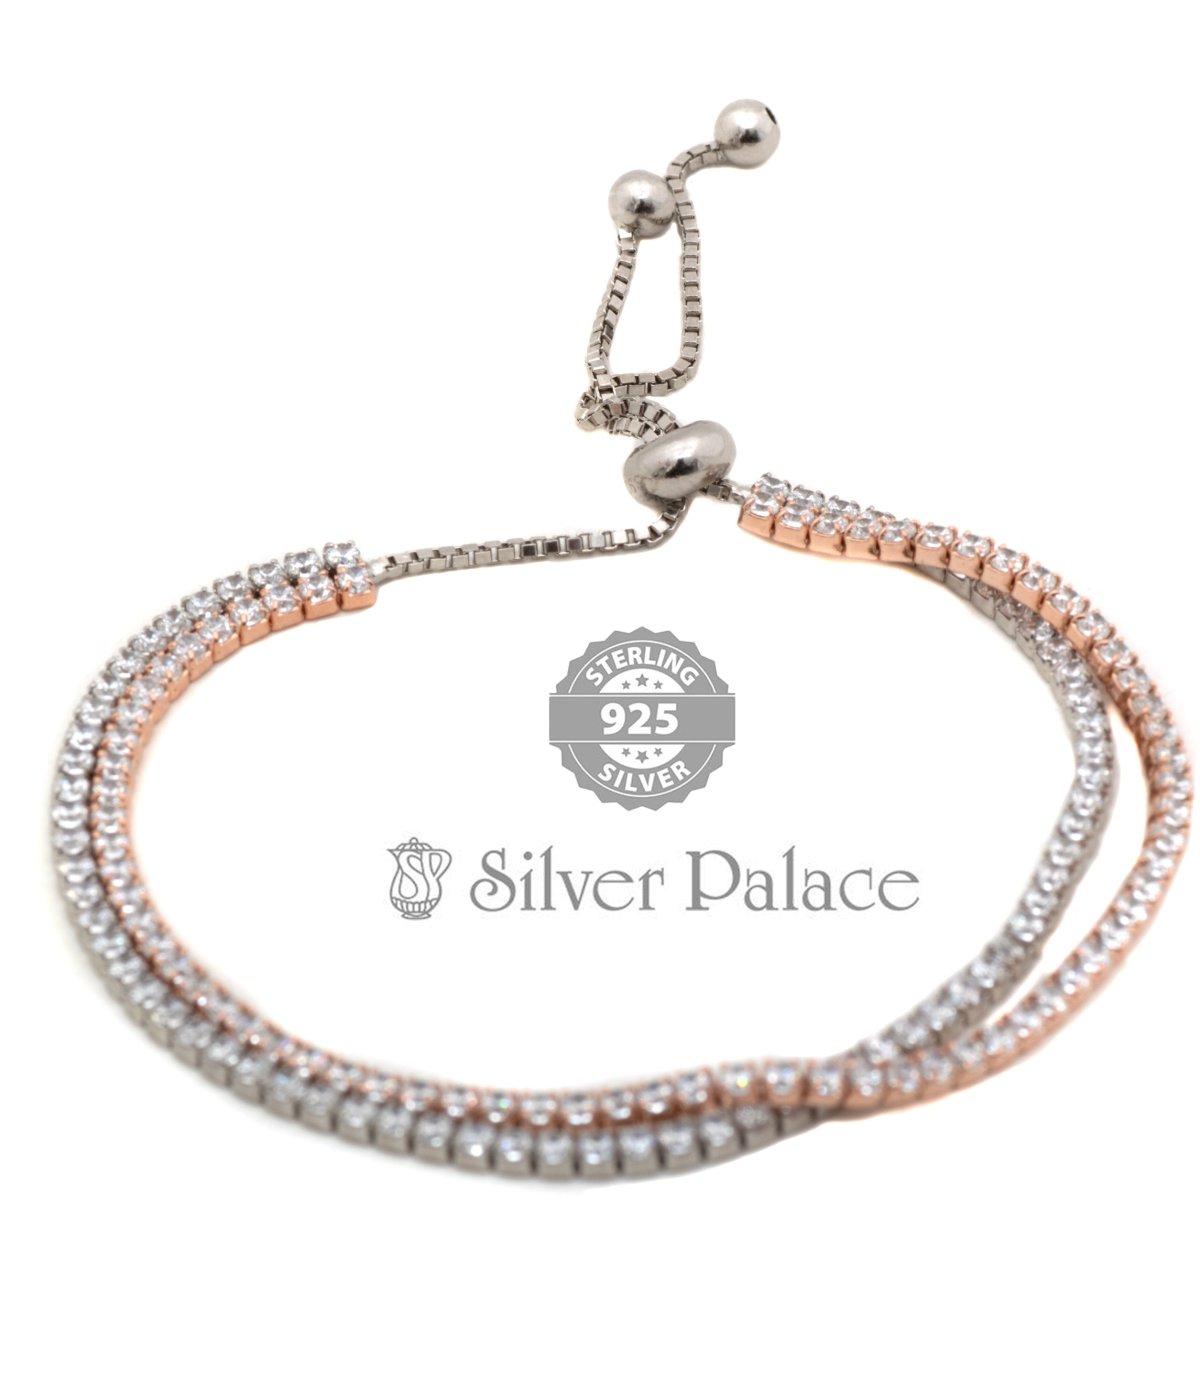 The Perfect Gift: Swashaa's Rose Gold Studded Diamond Bracelet